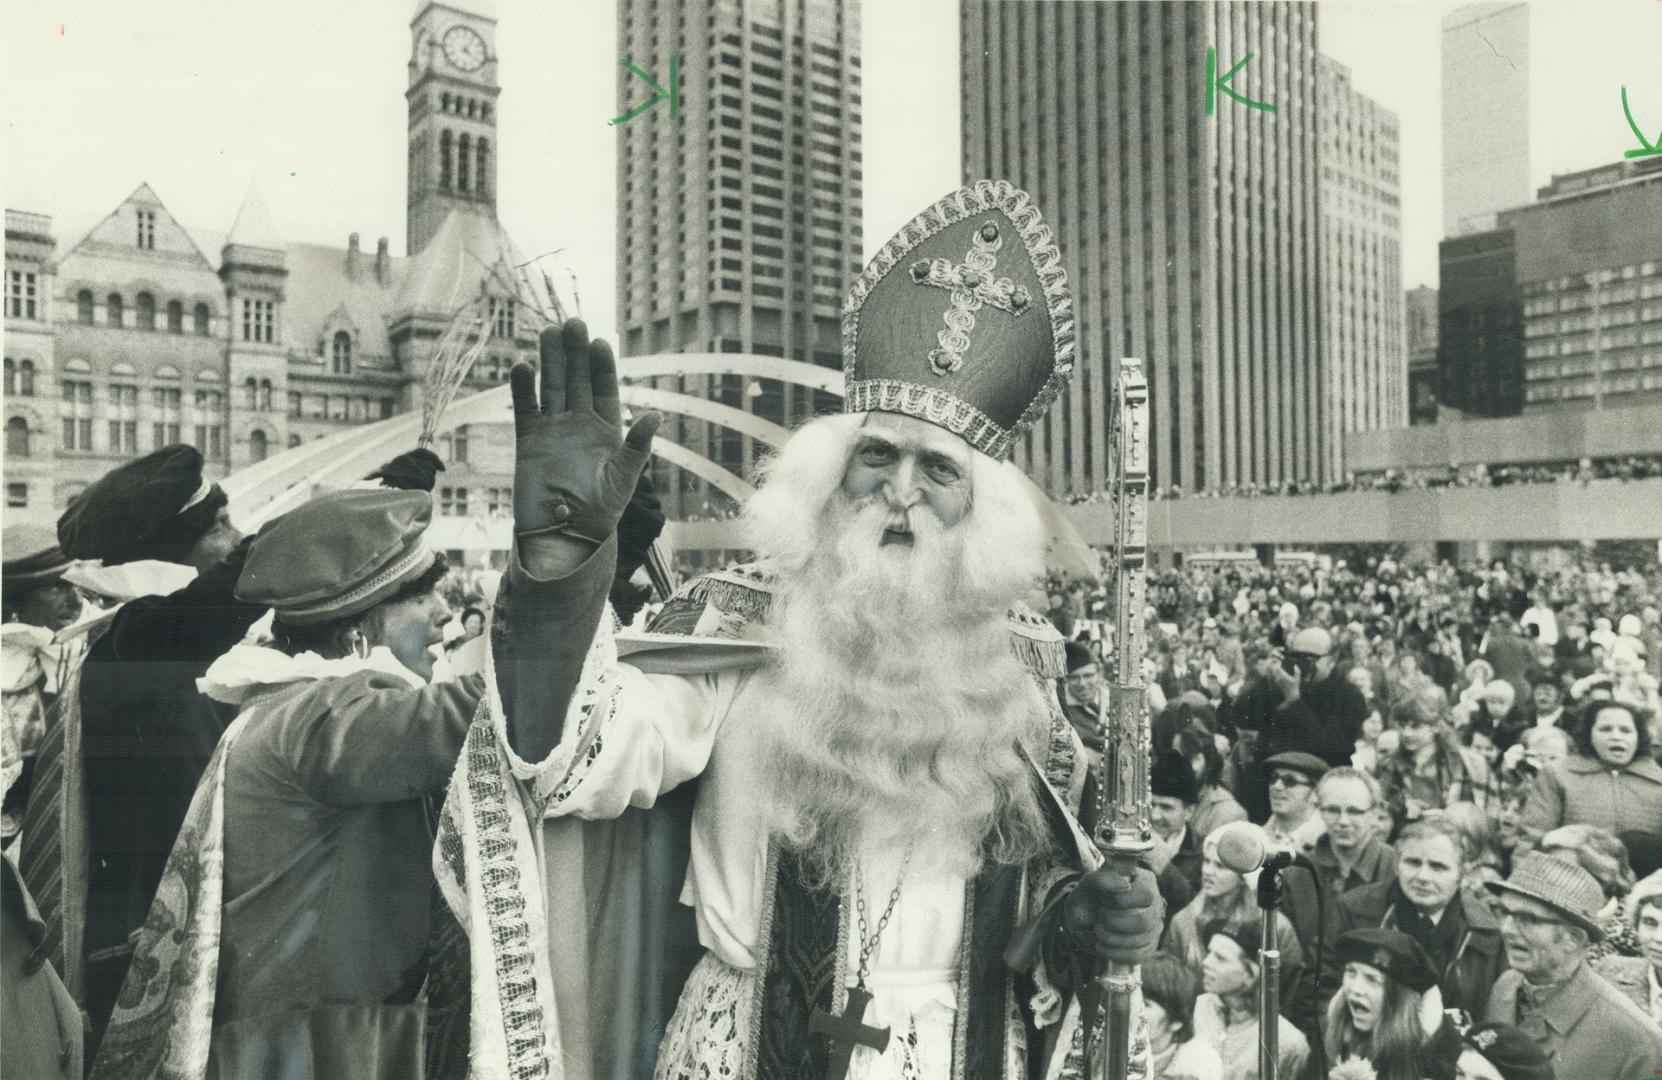 Sinterklaas, the Dutch Santa Claus, arrived in Toronto on Saturday to greet thousands of Metro residents